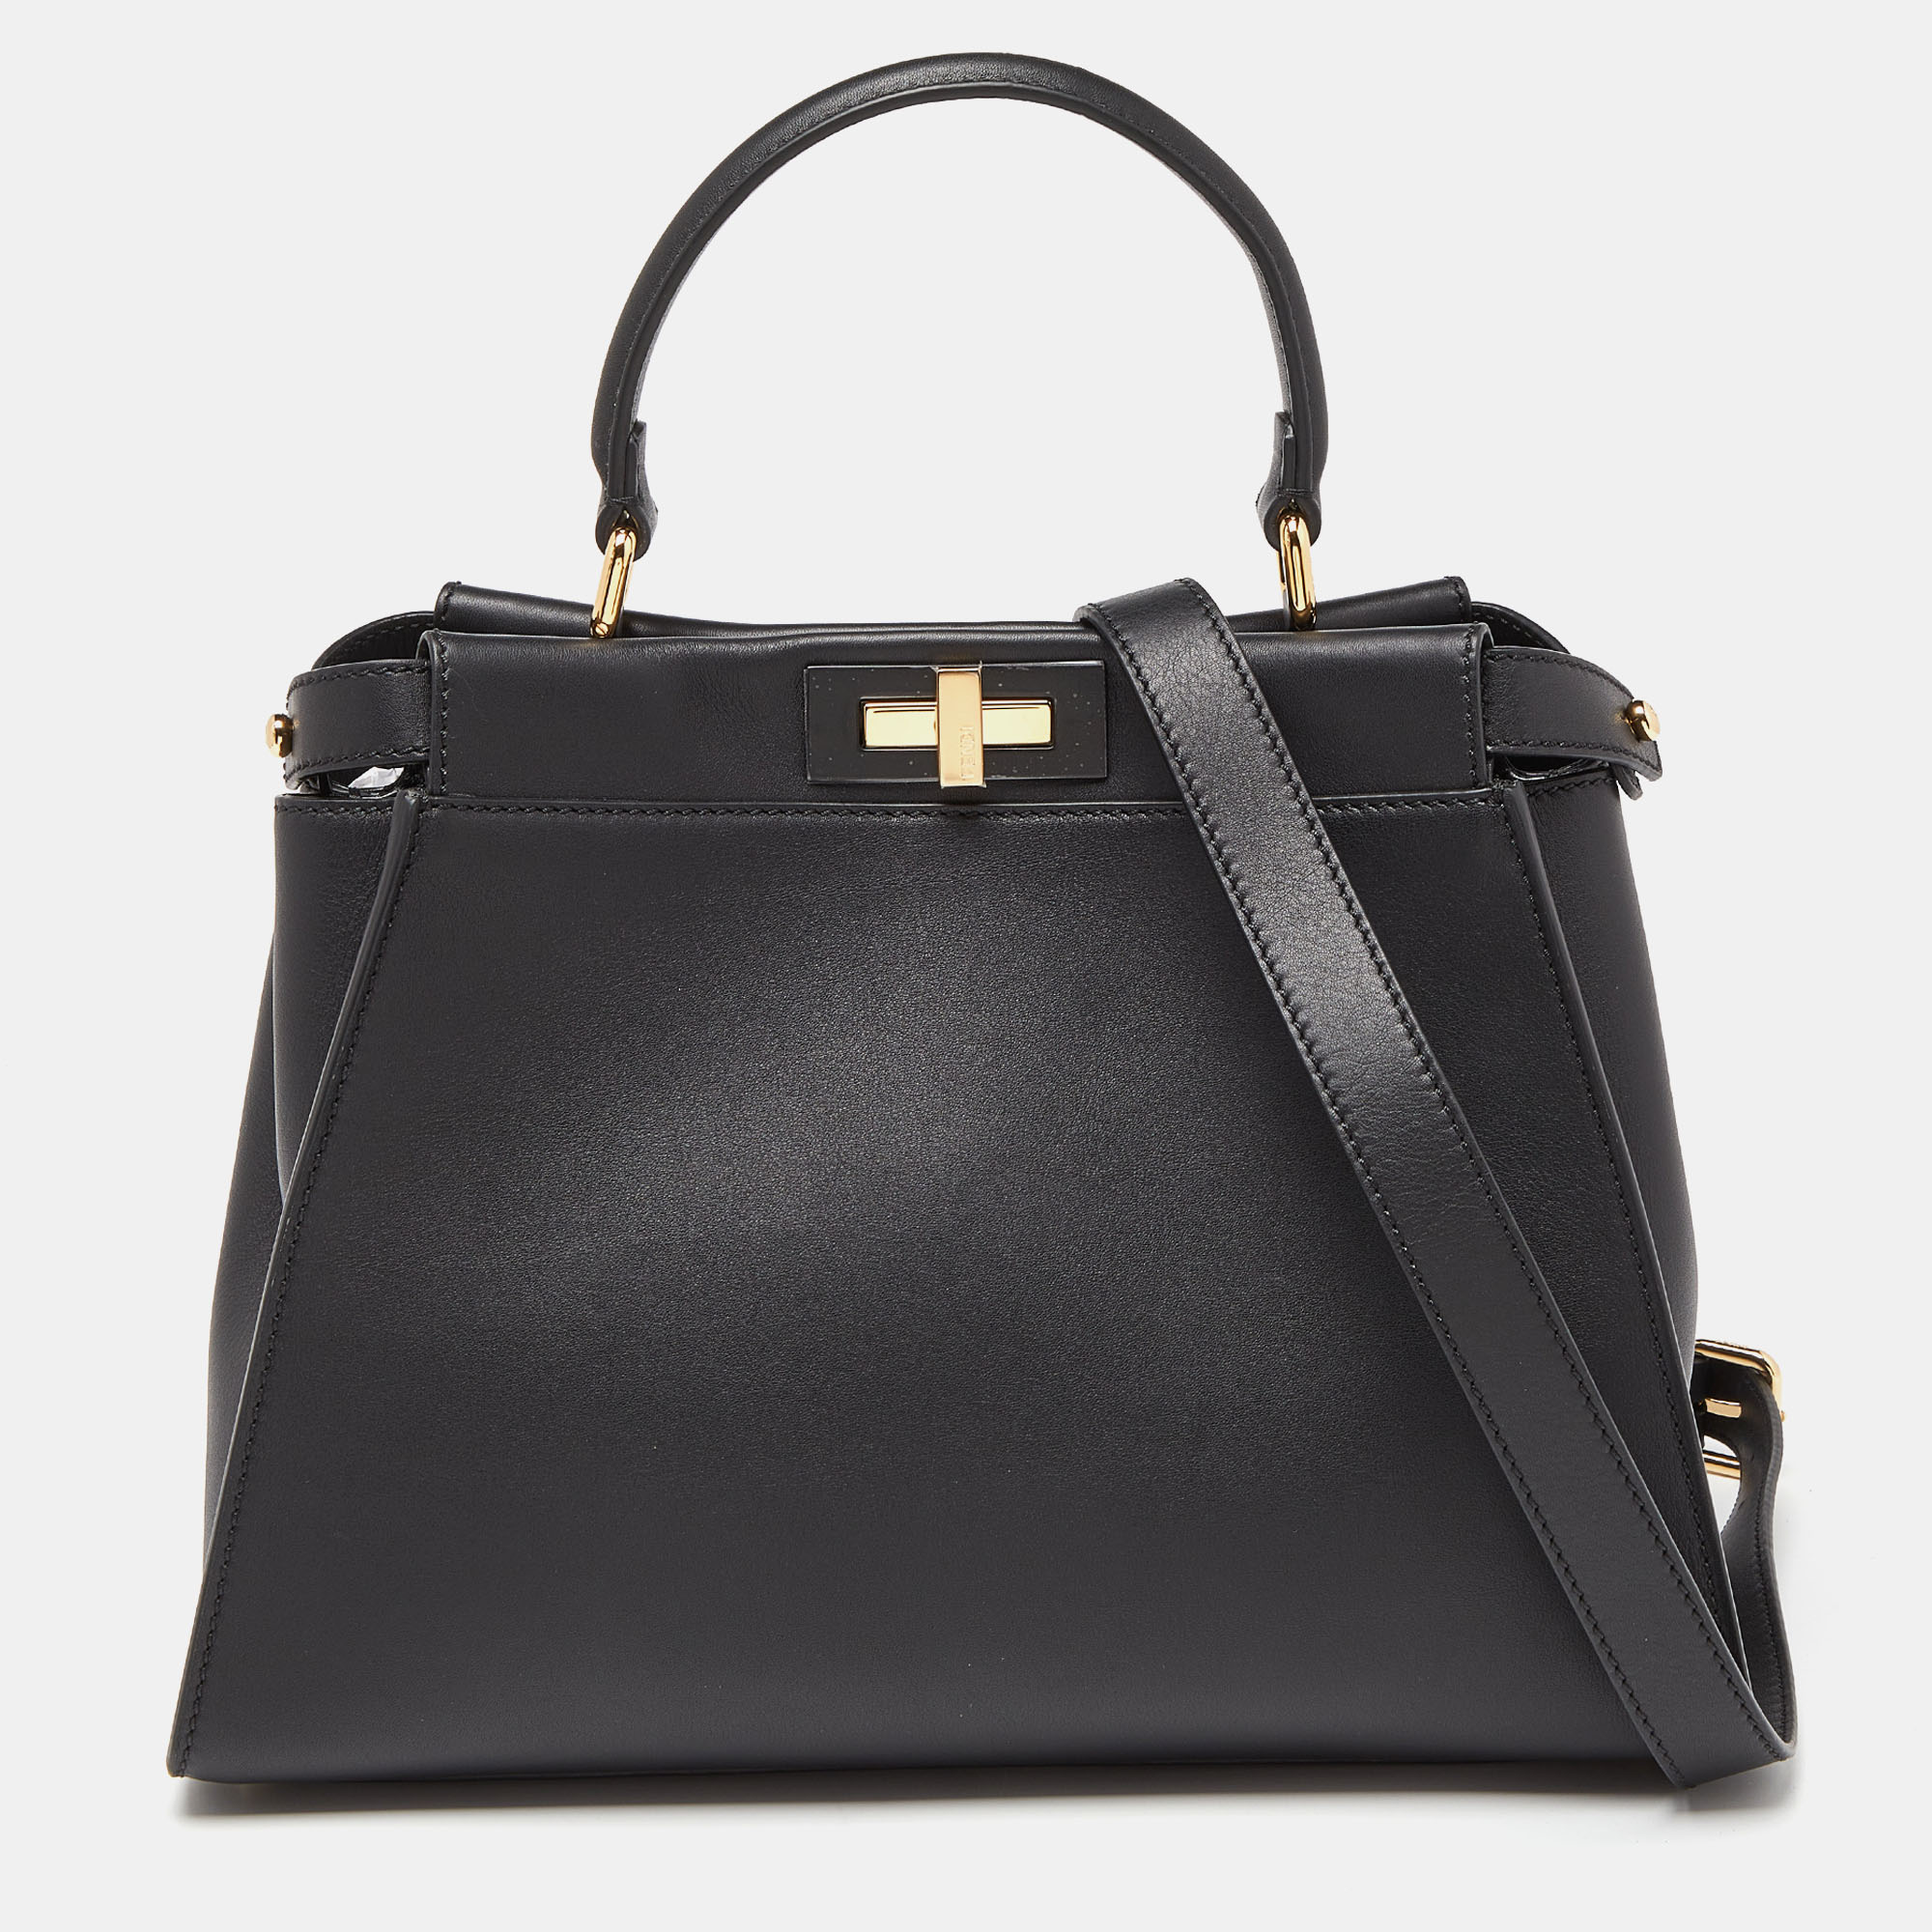 Fendi Black Leather Medium Peekaboo Iconic Top Handle Bag